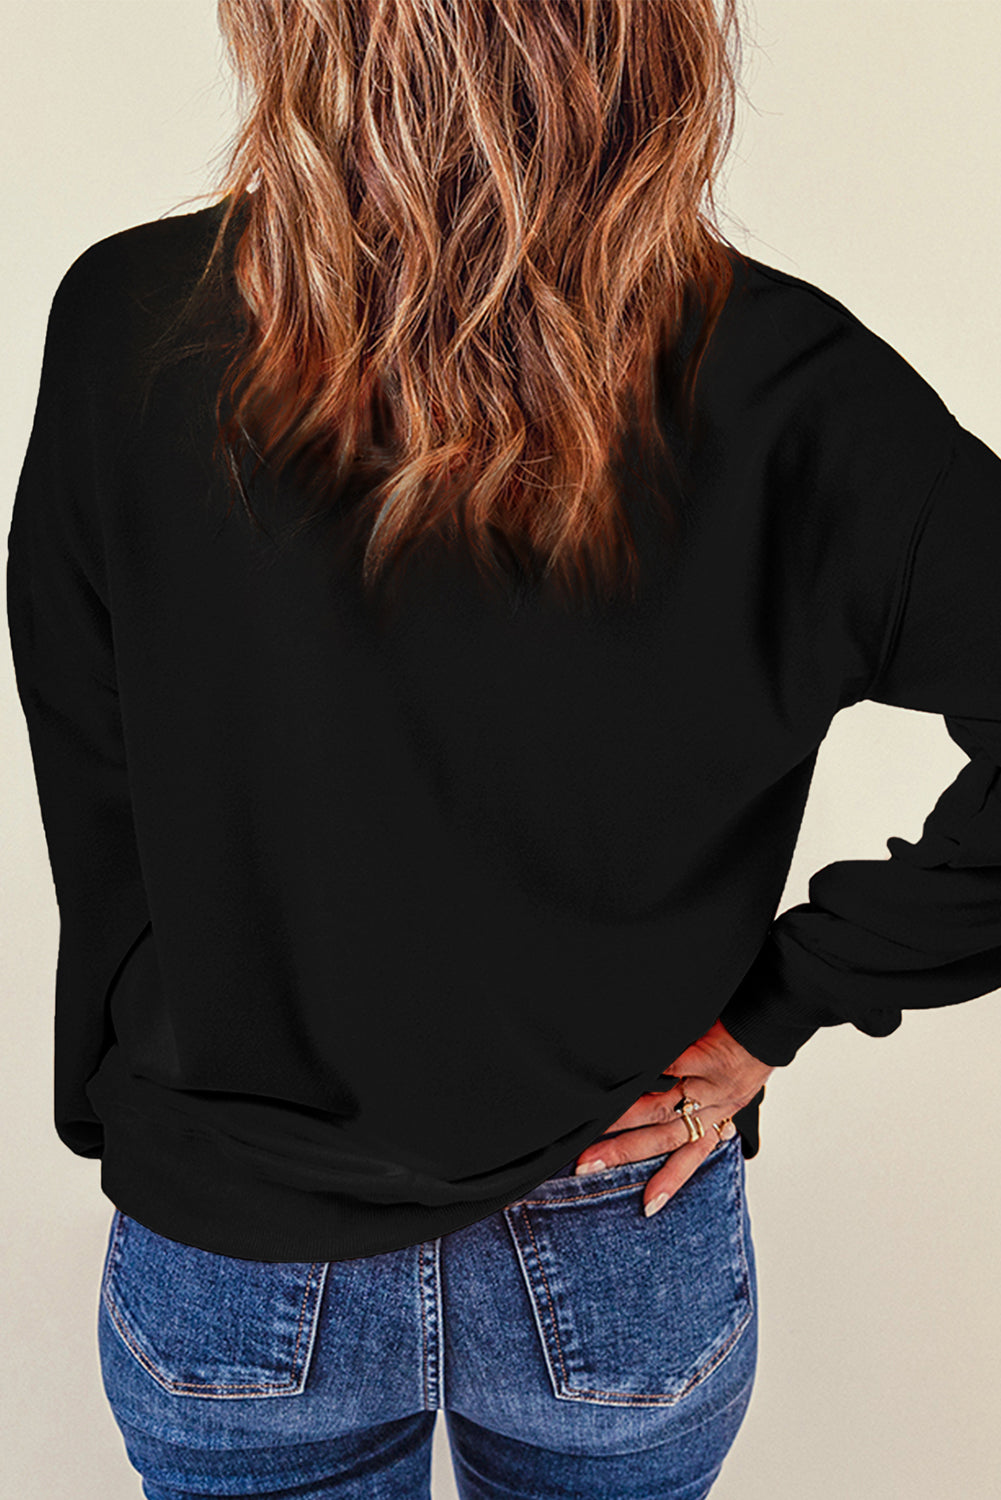 Black Sequined Christmas Tree Pattern Pullover Sweatshirt Graphic Sweatshirts JT's Designer Fashion